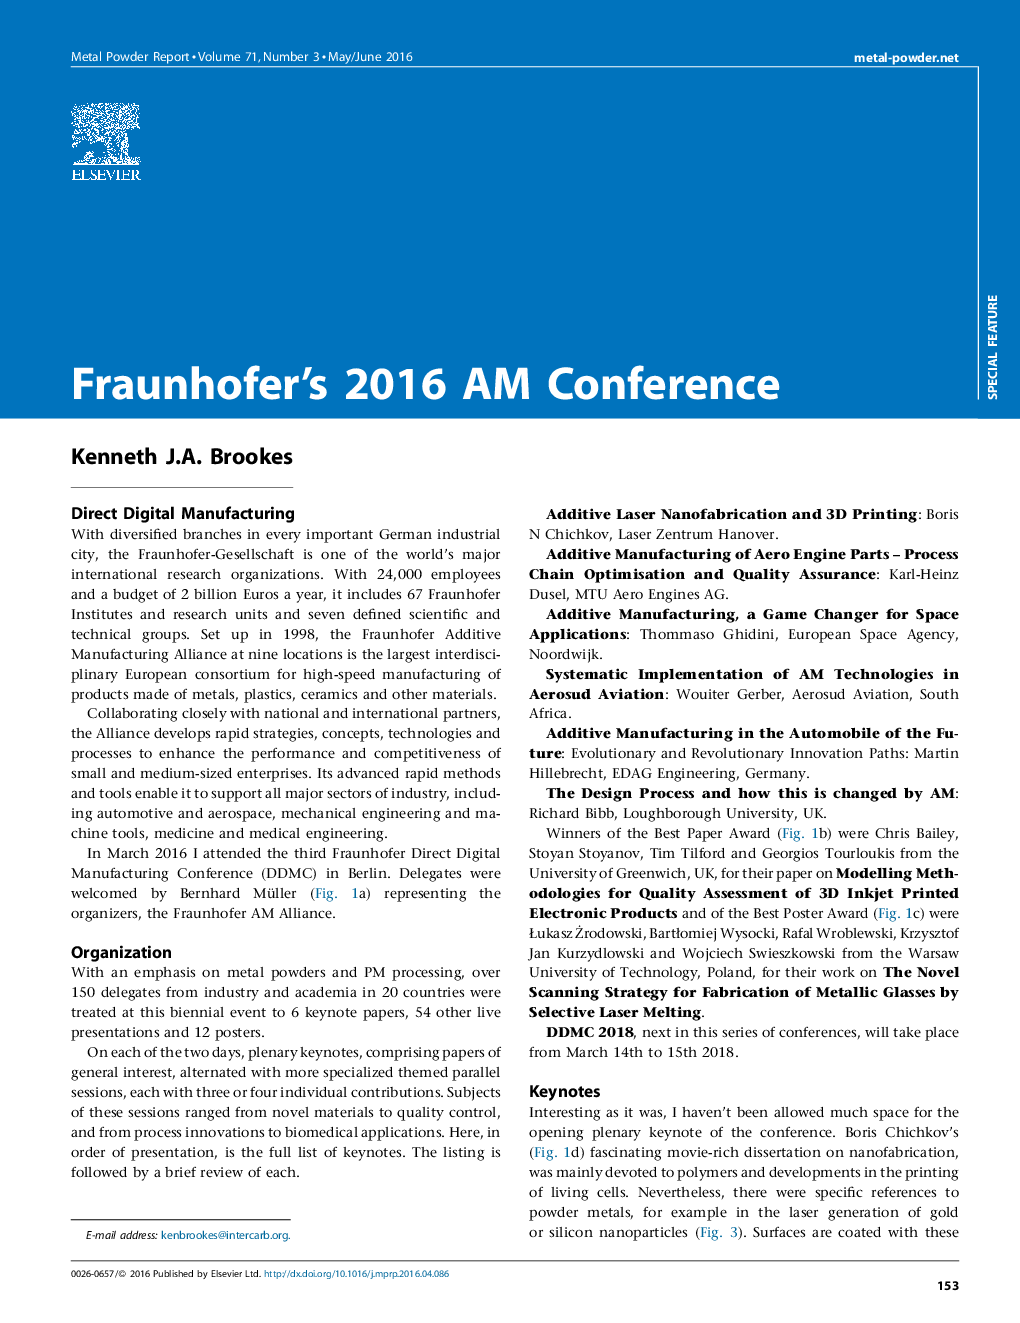 Fraunhofer's 2016 AM Conference